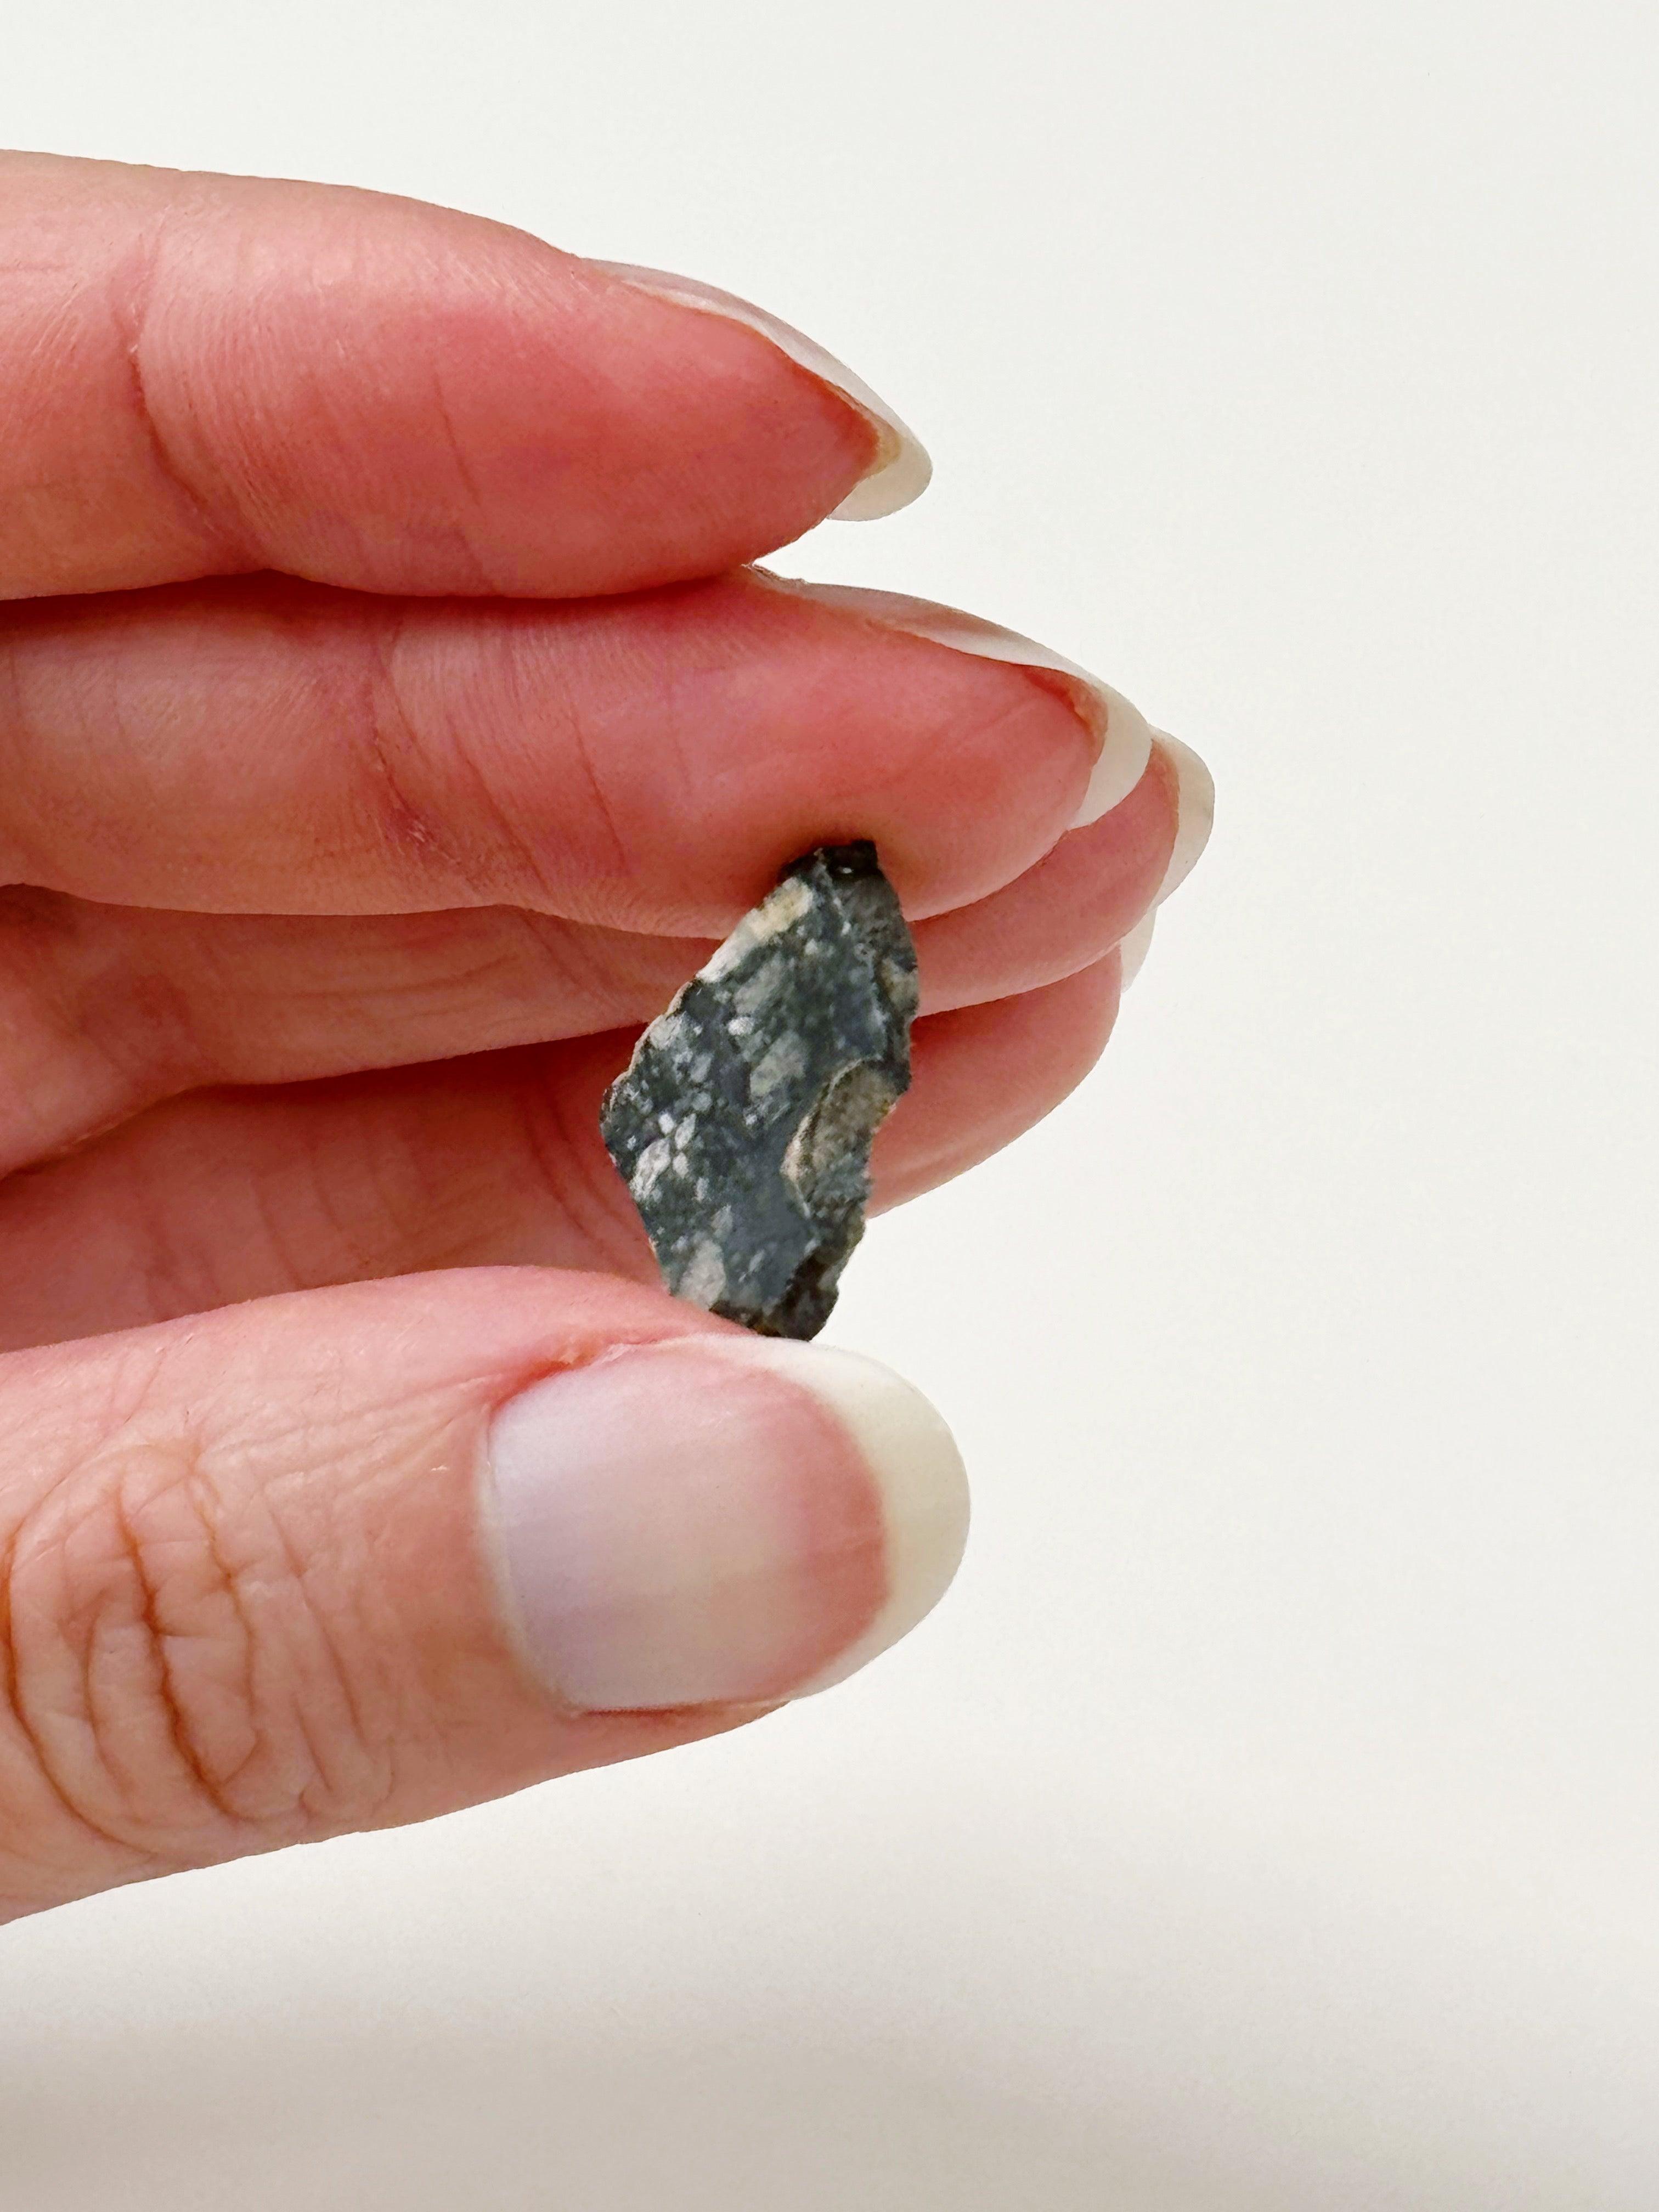 LUNAR METEORITE 1 - feldspathic breccia, lunar meteorite, meteorite, moon, moon meteorite, recently added - The Mineral Maven